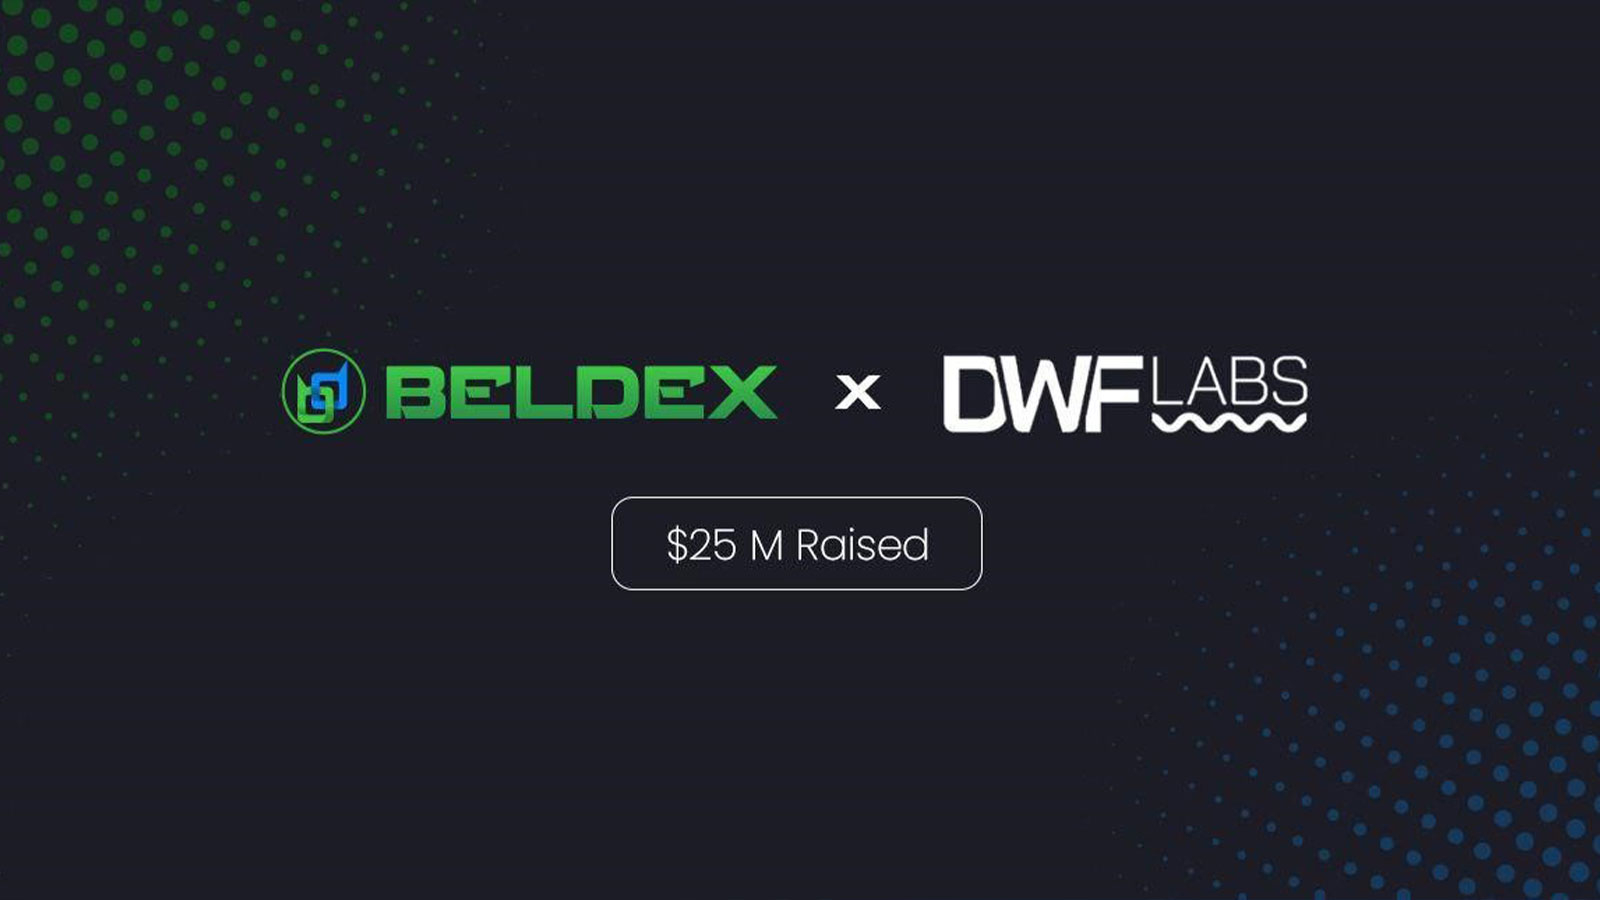 Beldex Raises 25 M From Web3 Investor DWF Labs